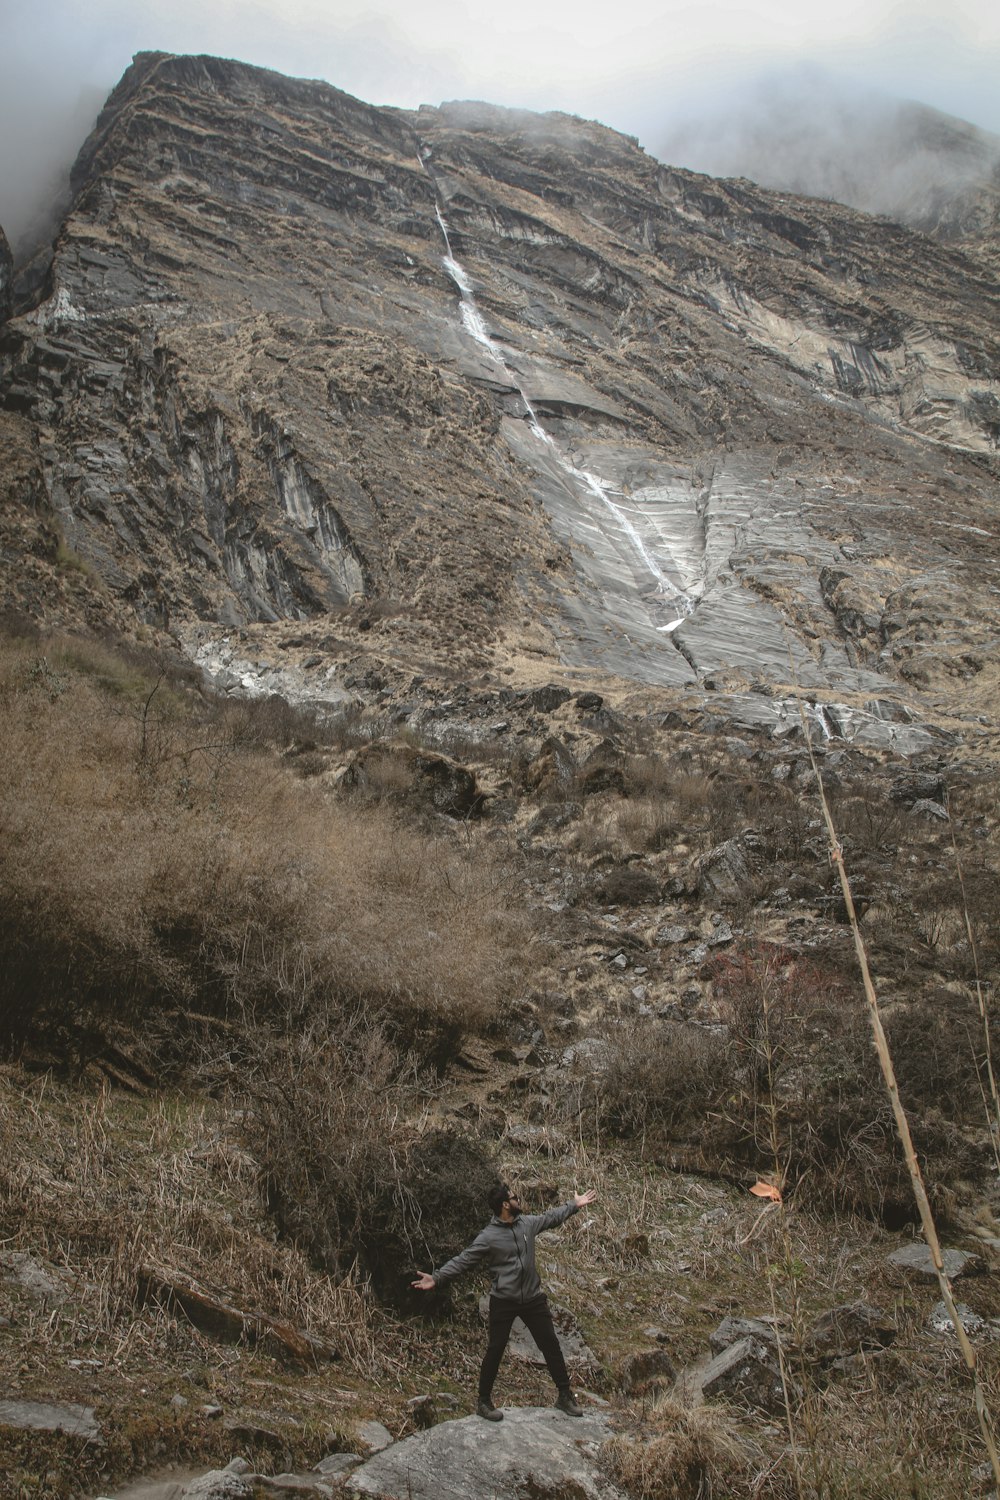 a man standing on top of a rocky hillside